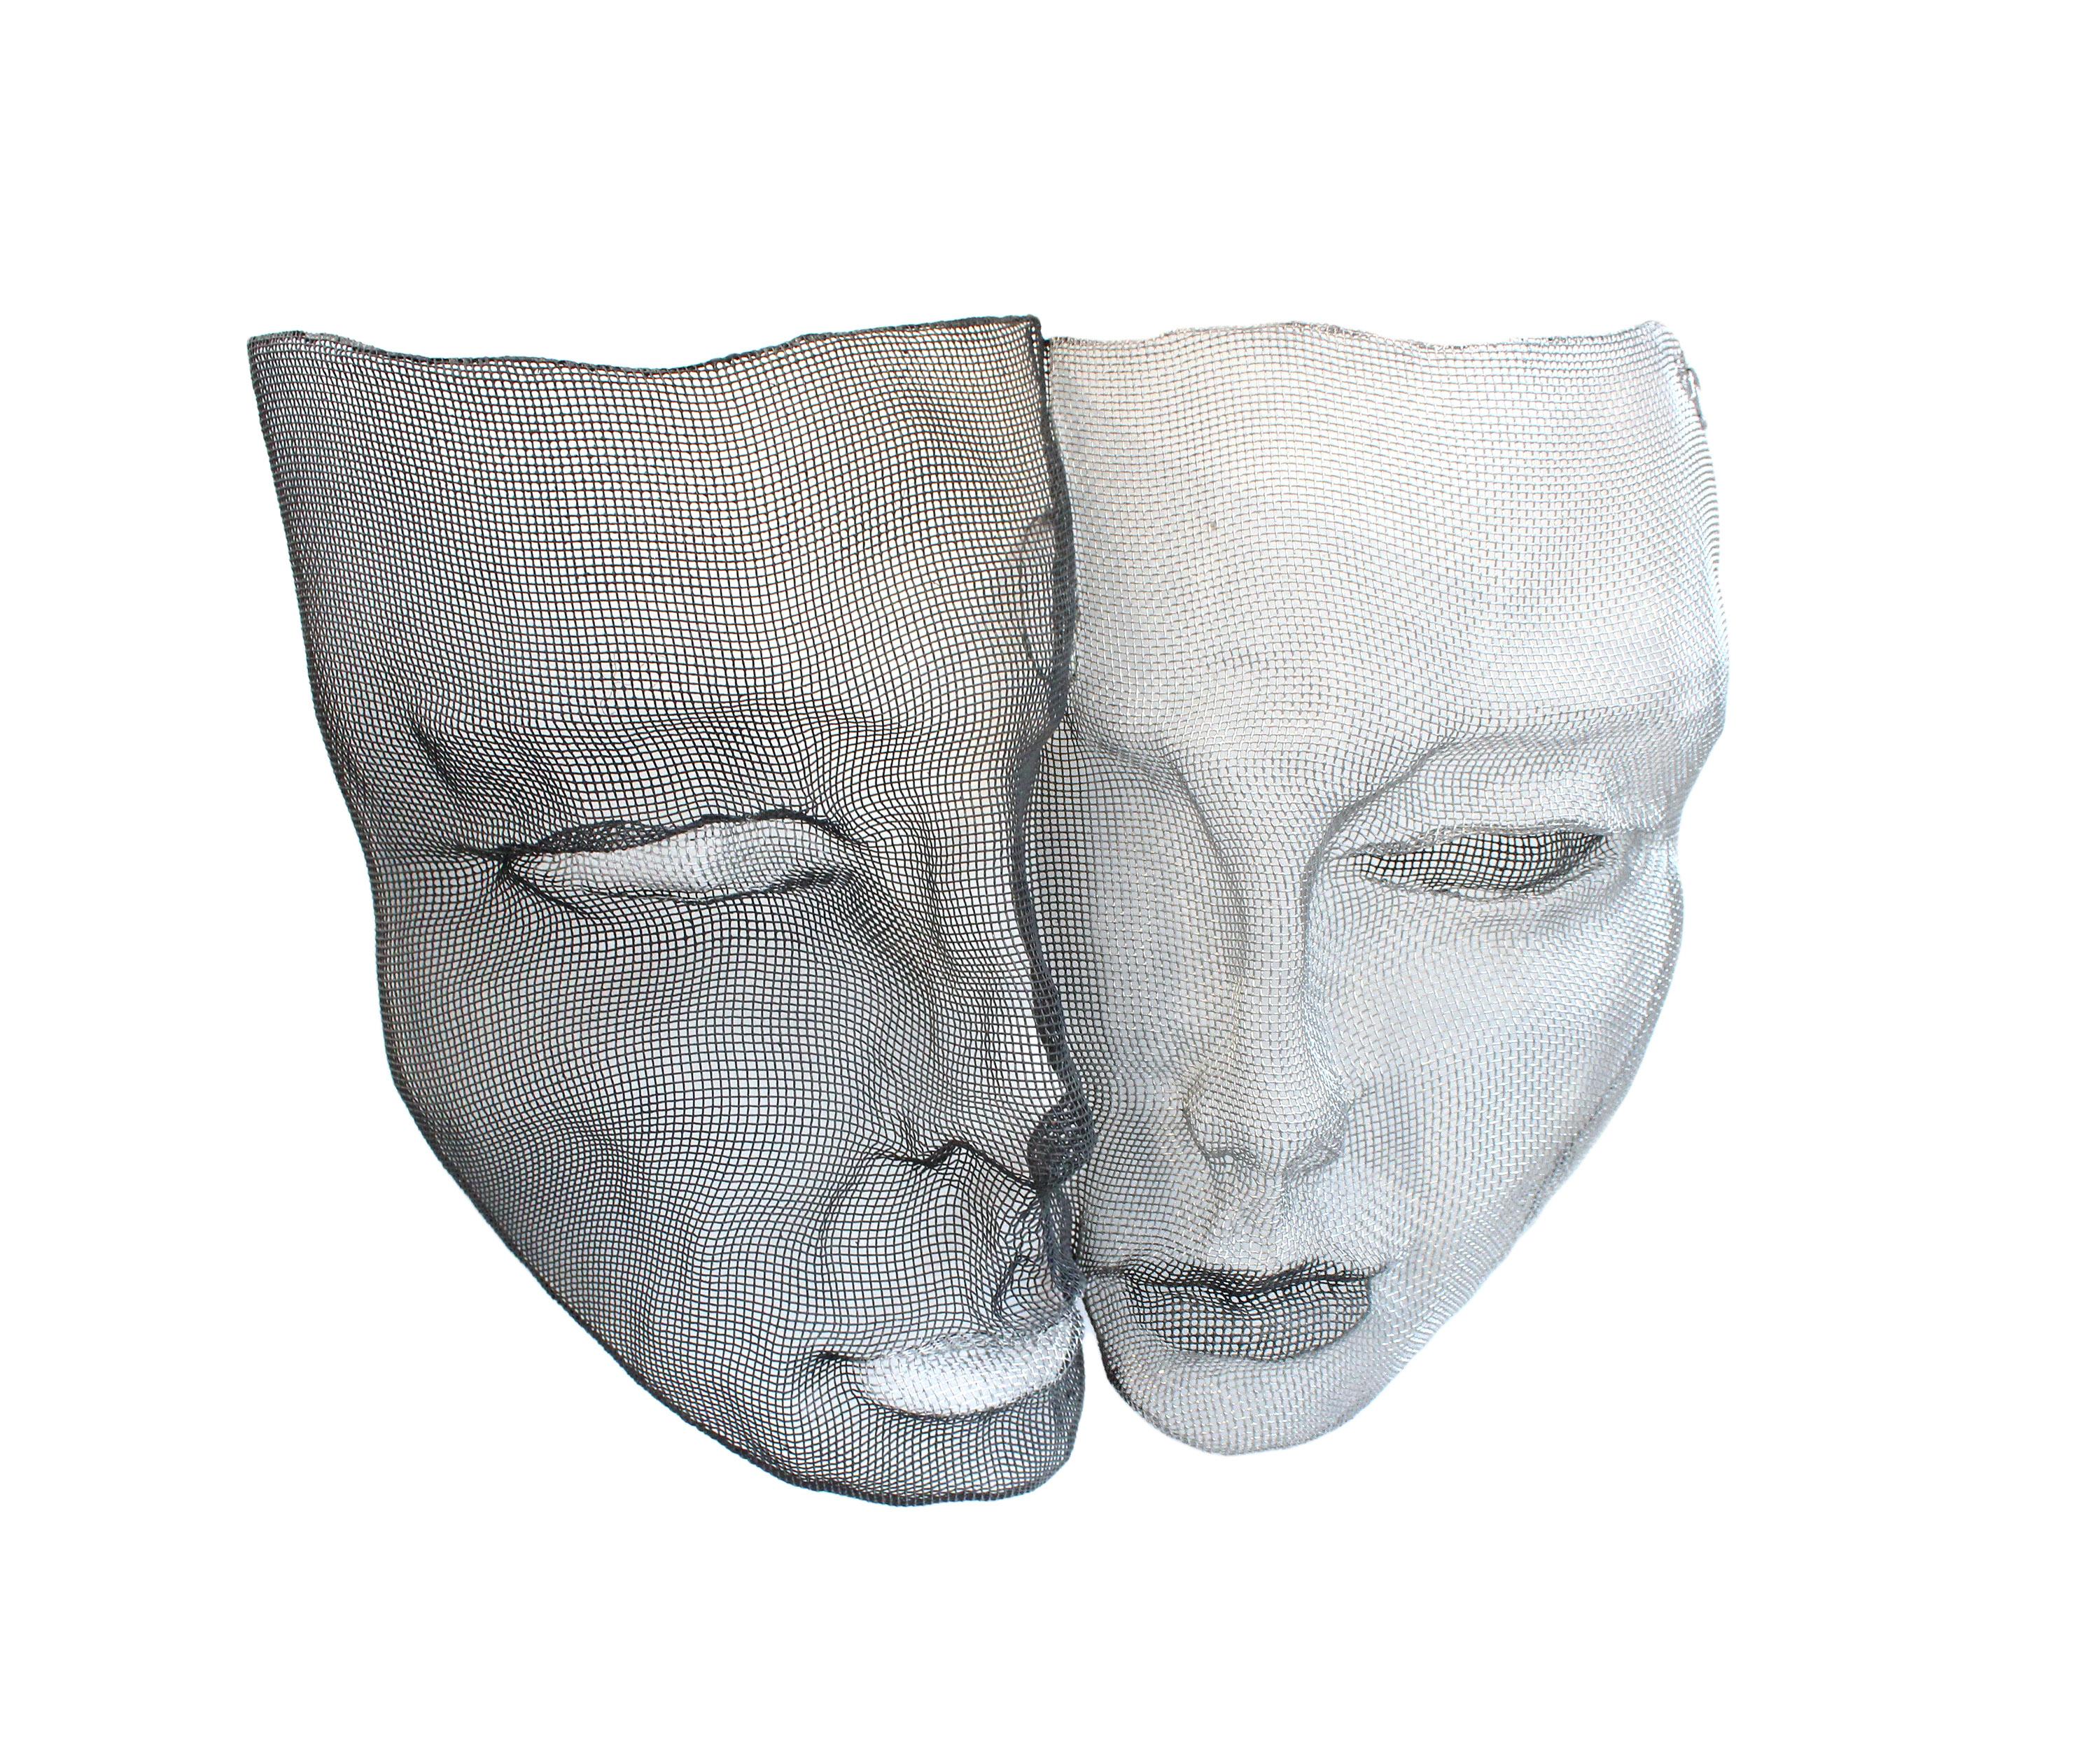 Ella Almog Figurative Sculpture - Black and White Face, Mesh Sculpture